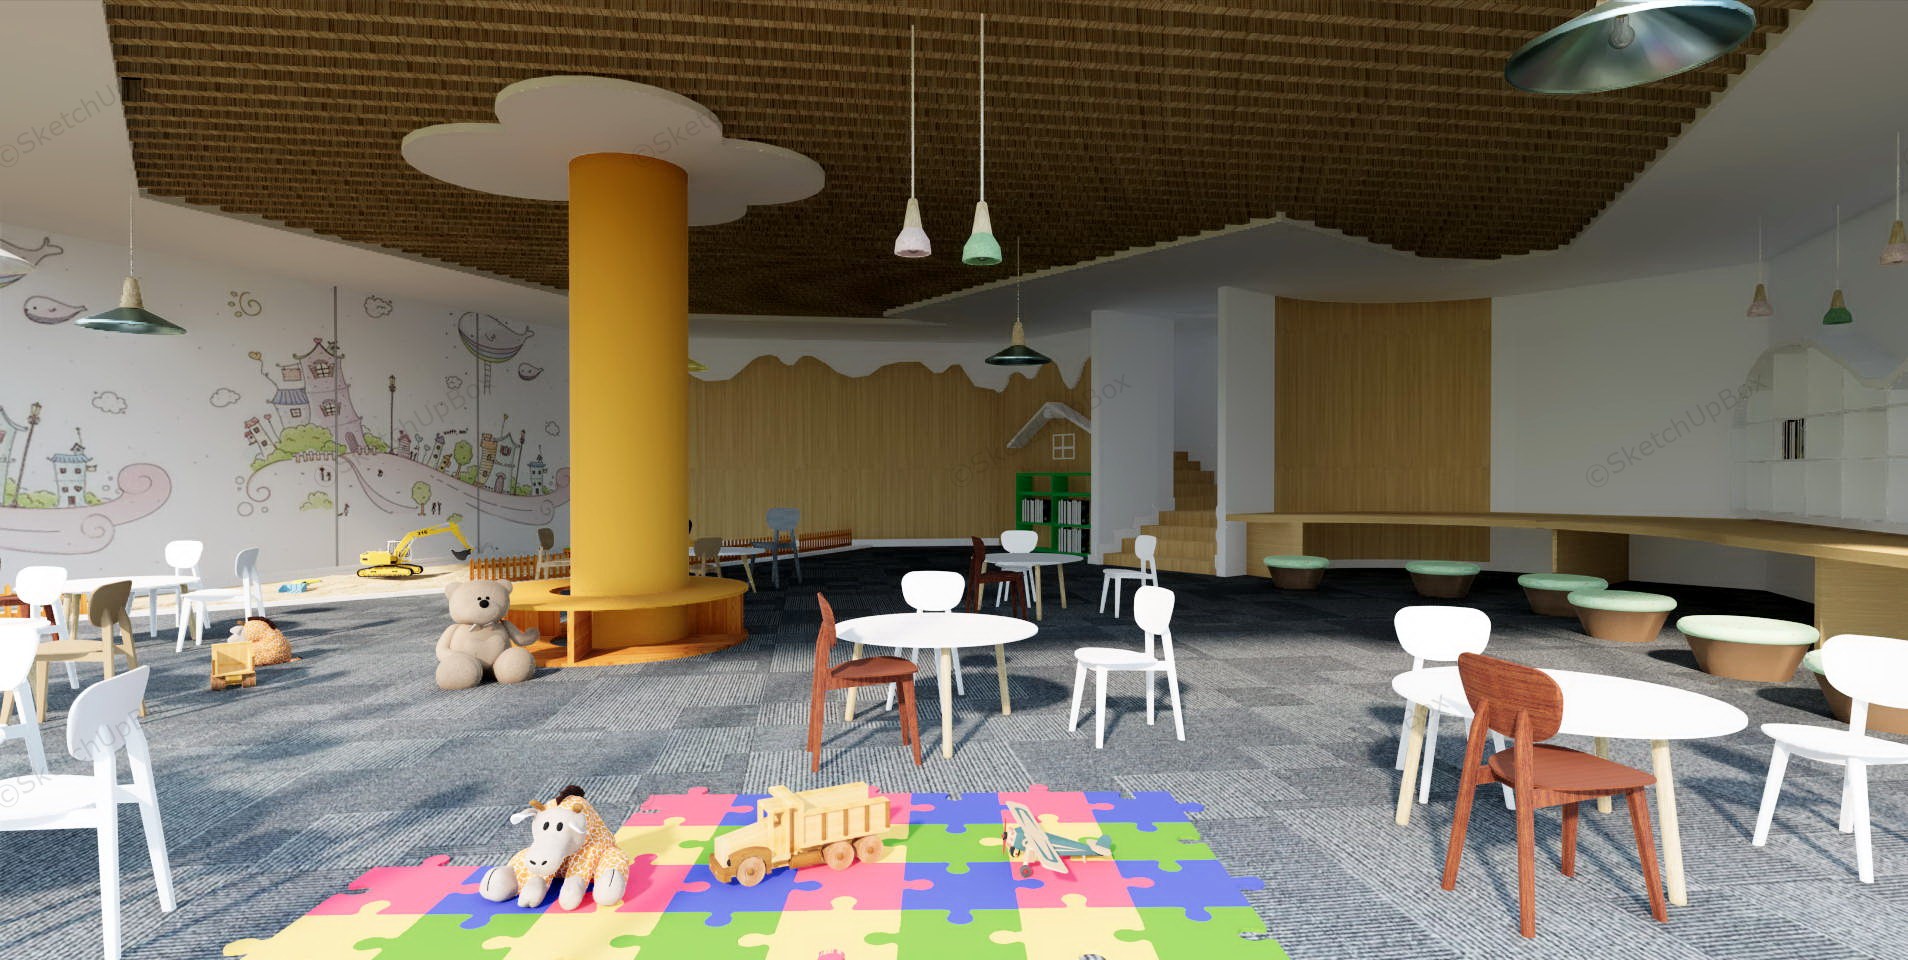 Preschool Interior And Exterior Design sketchup model preview - SketchupBox